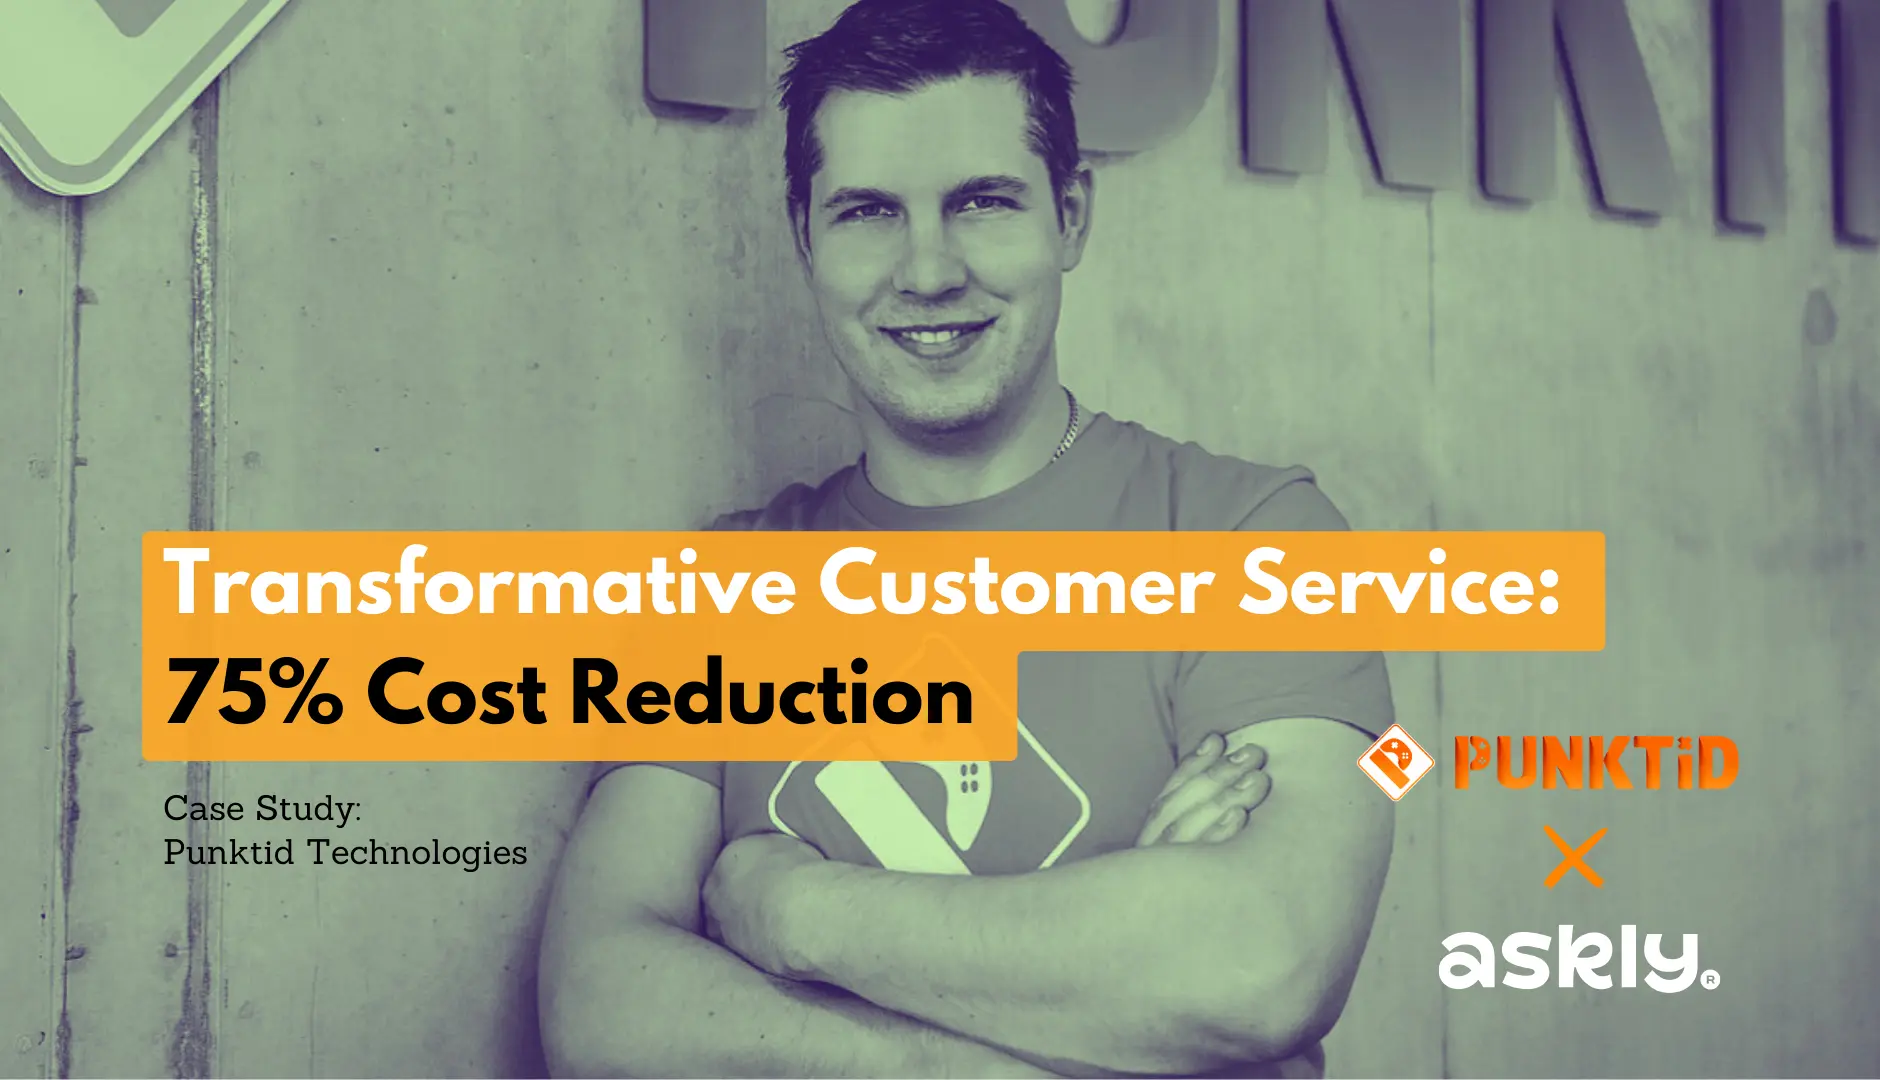 transformative-customer-service-punktid-technologies-75-cost-reduction